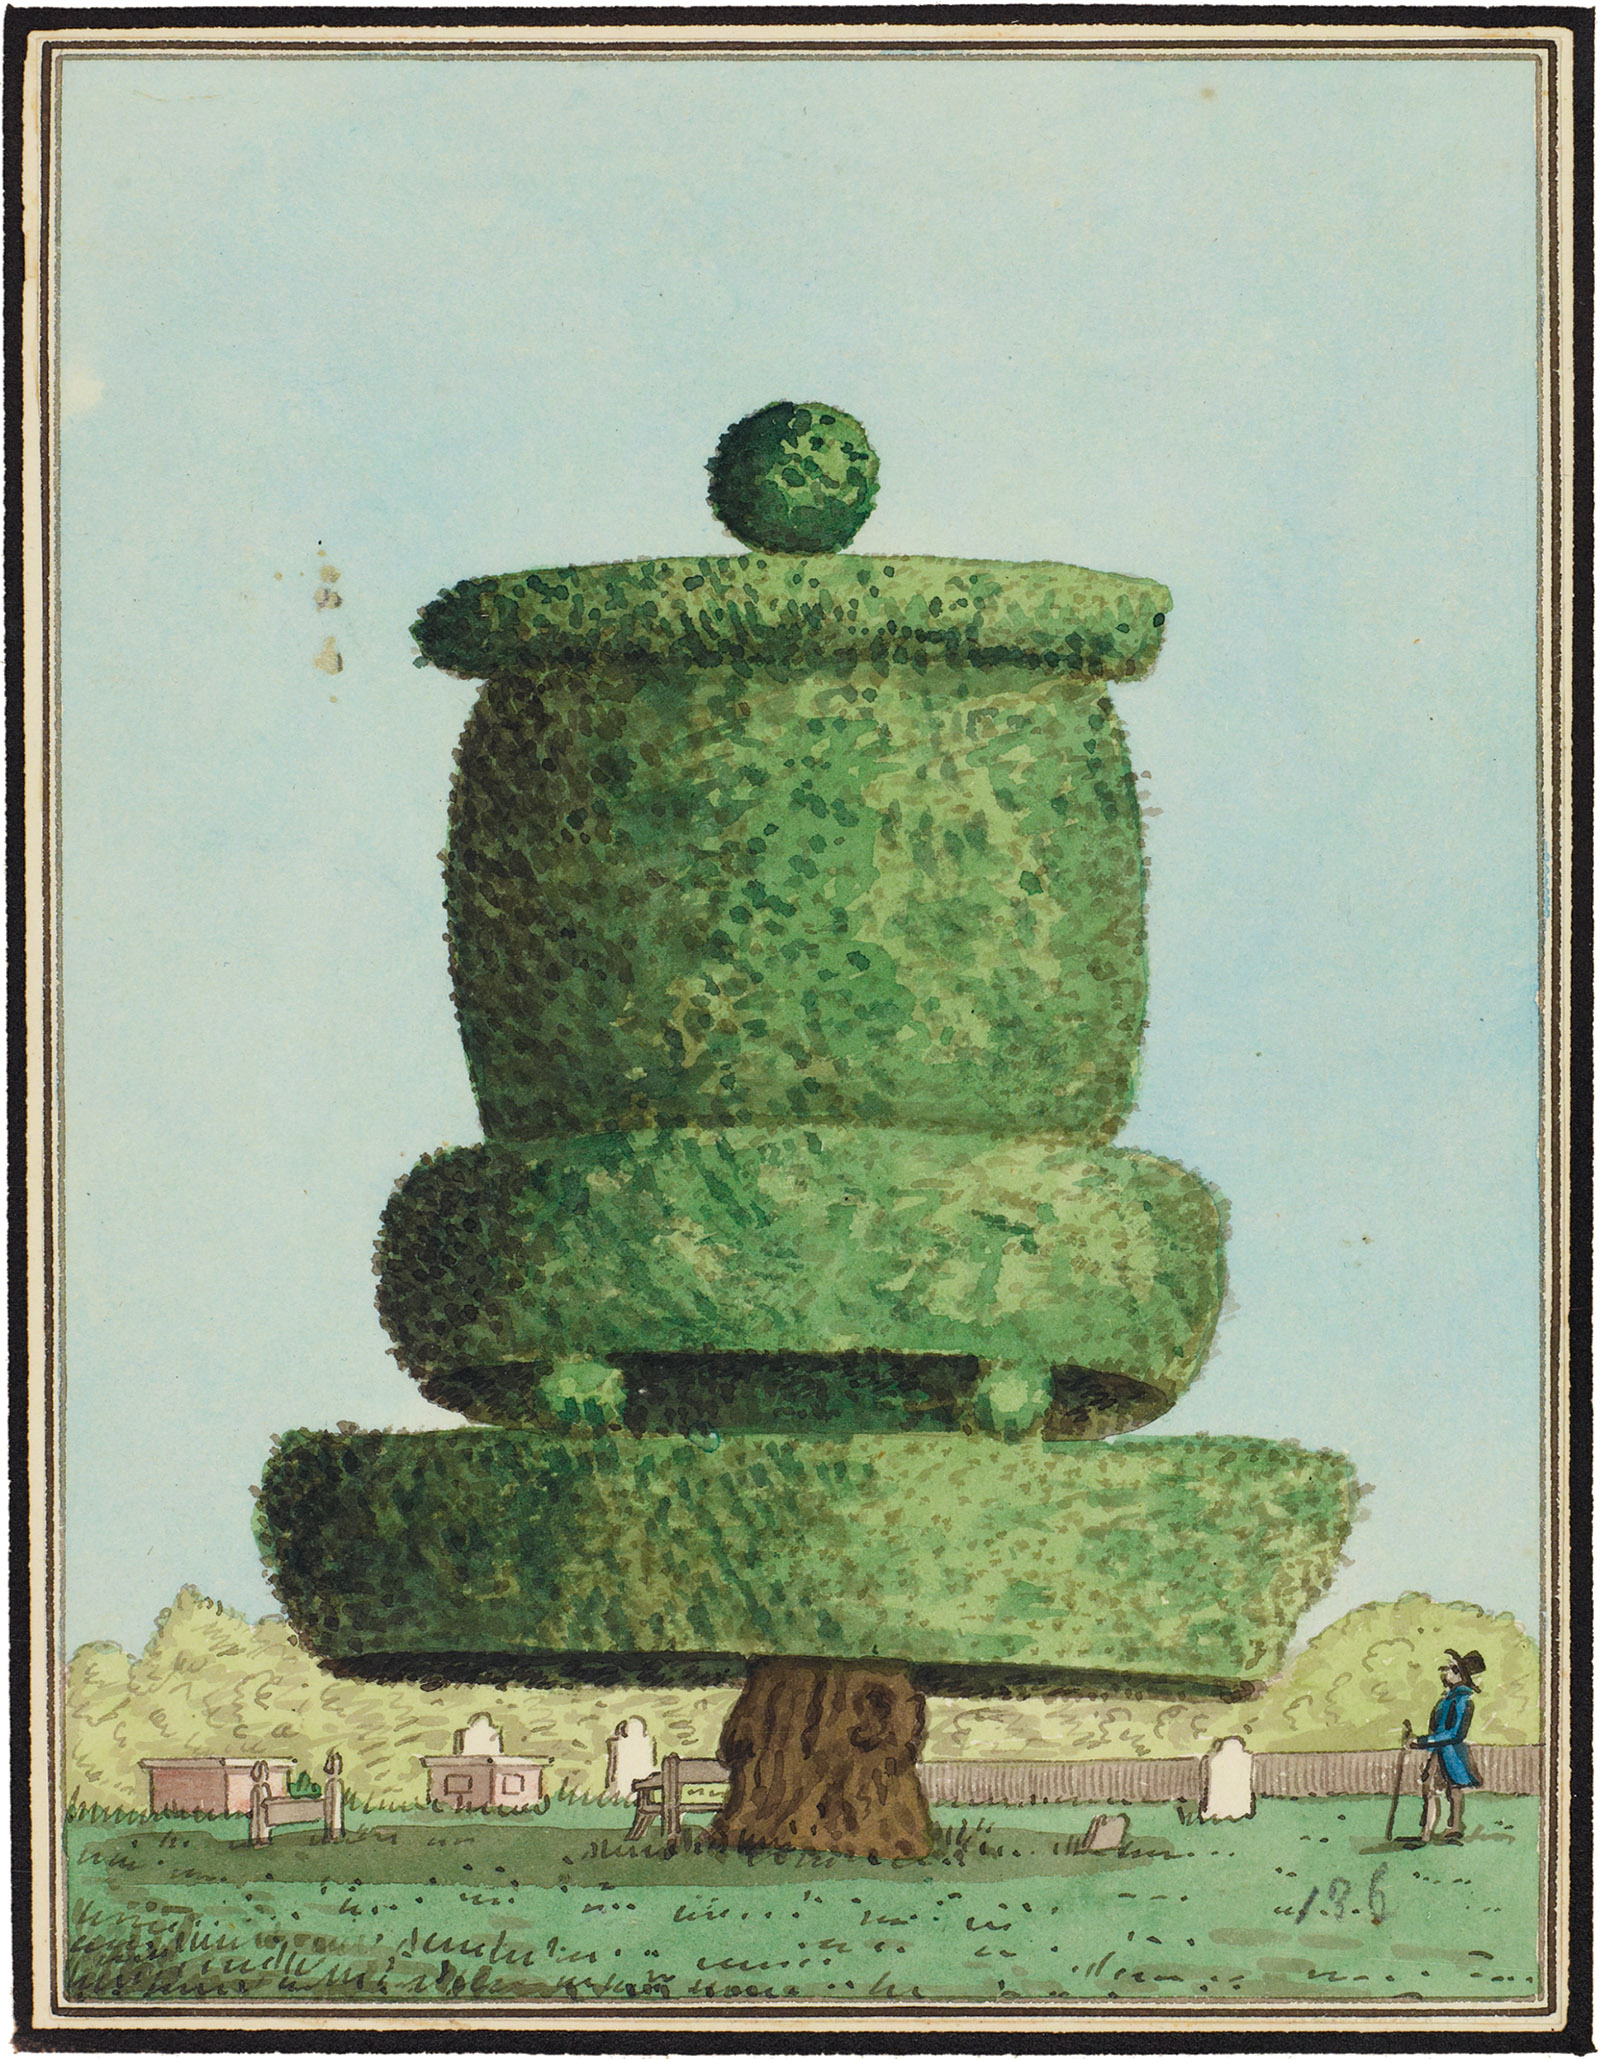 The Harlington Yew; illustration by John Oldfield